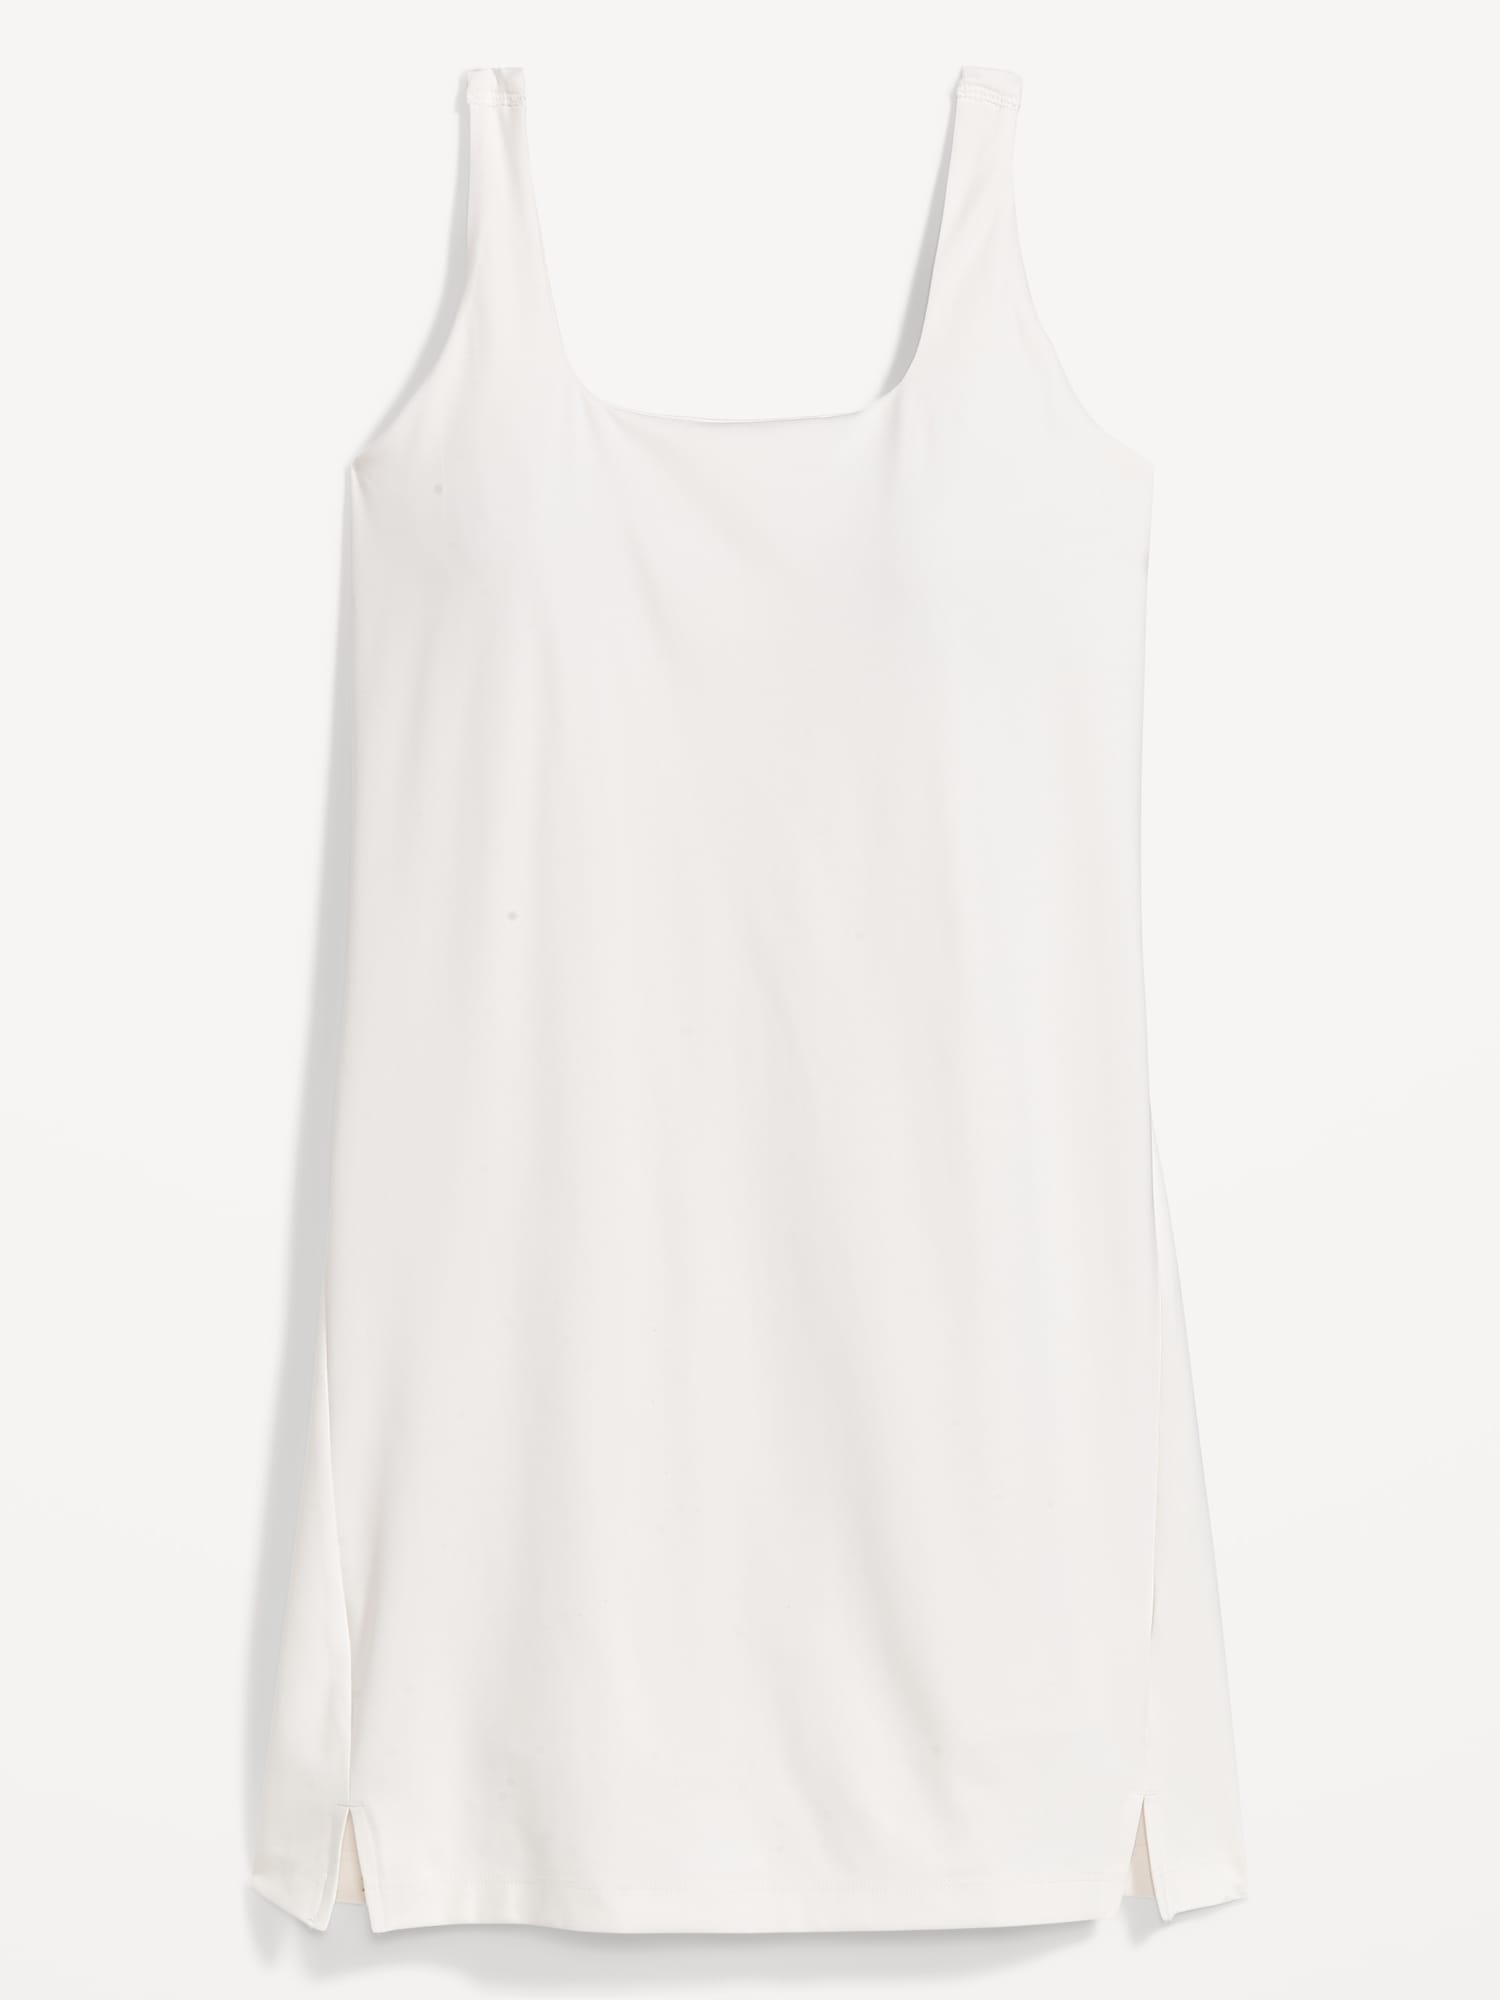 Old Navy Women's PowerSoft Sleeveless Shelf-Bra Support Dress Size 2X 3X  $55